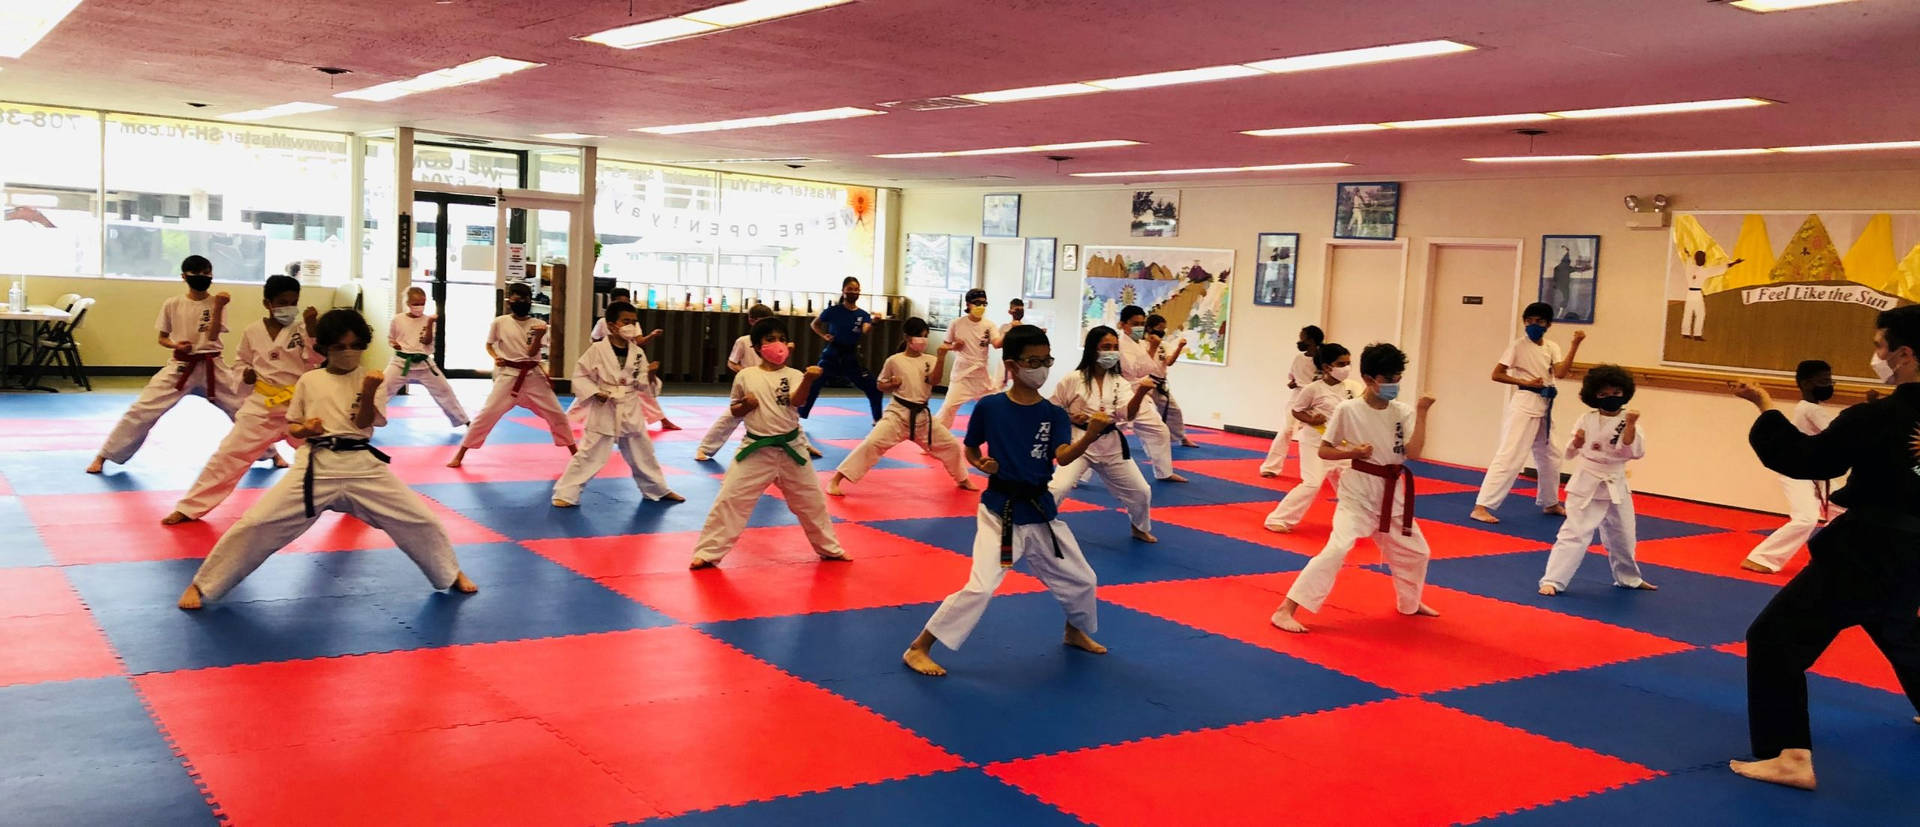 Karate Students Kids In Dojo Wallpaper